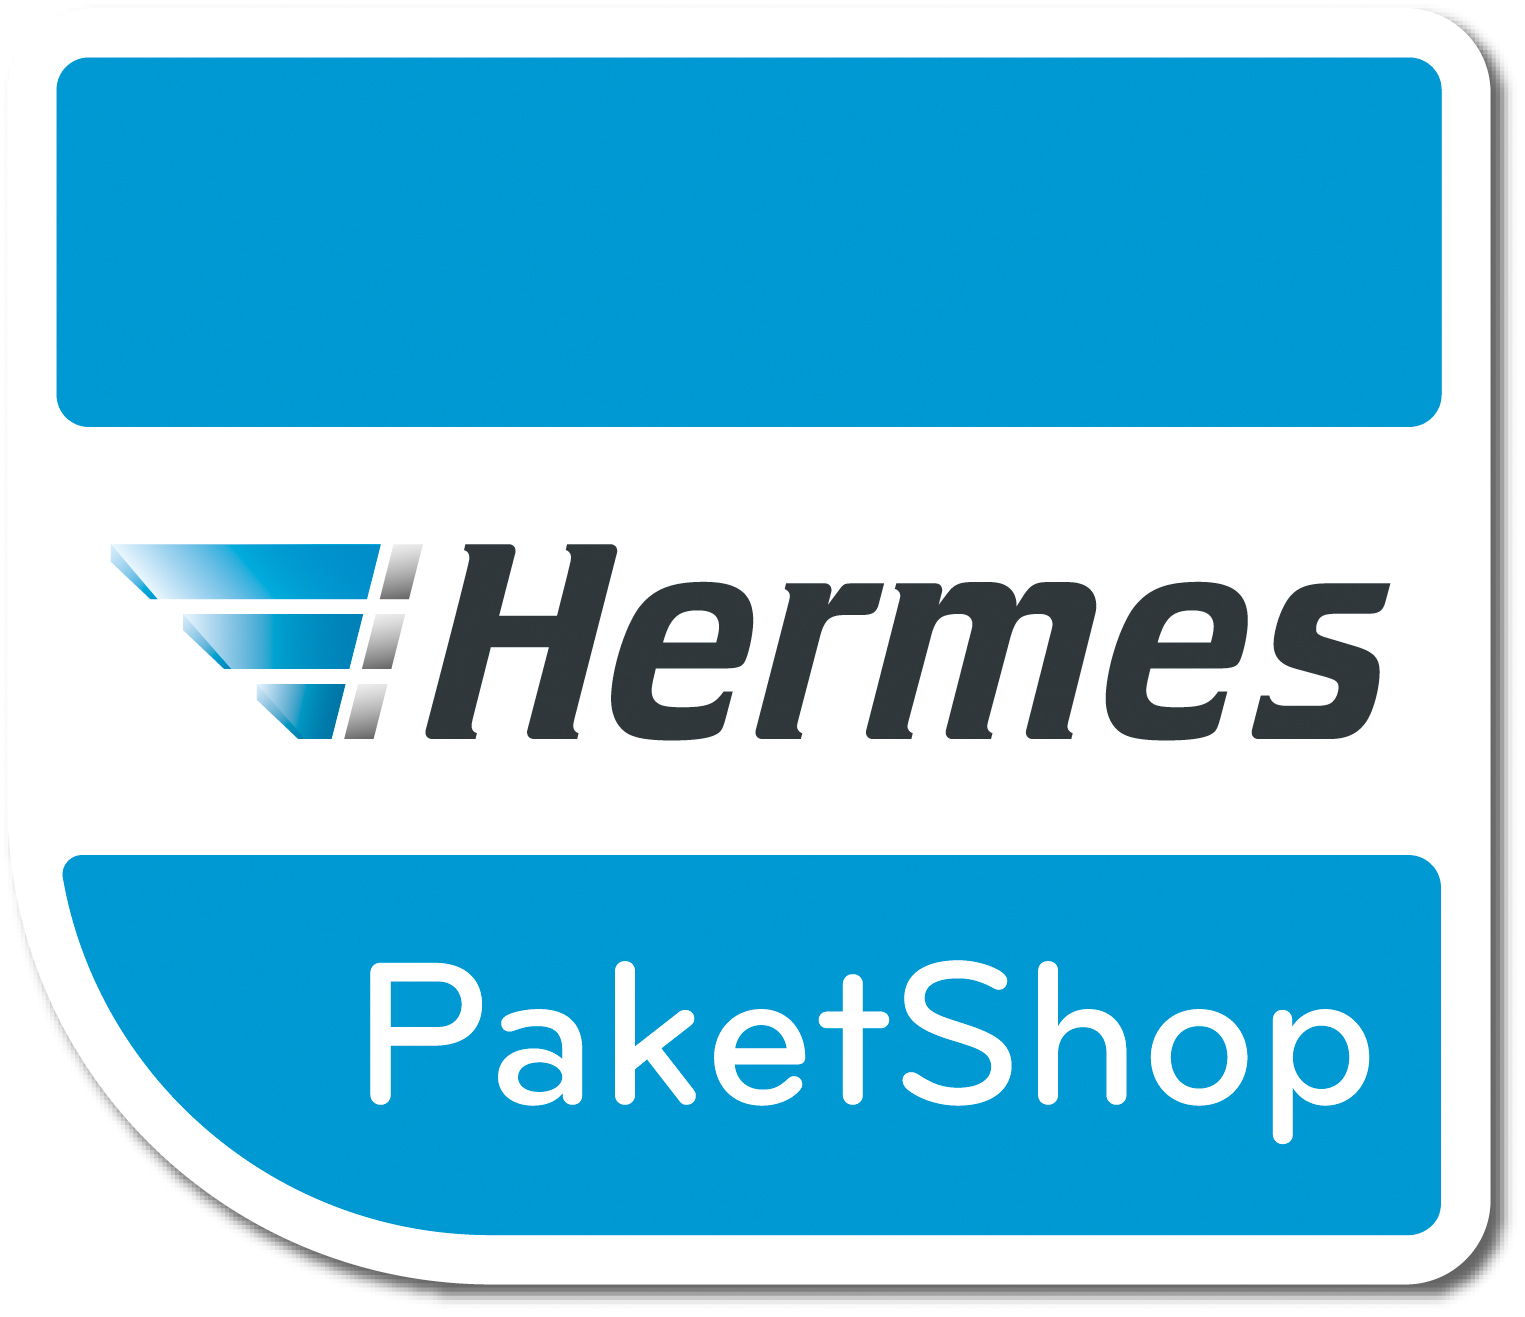 Hermes Paketshop Billerbeck